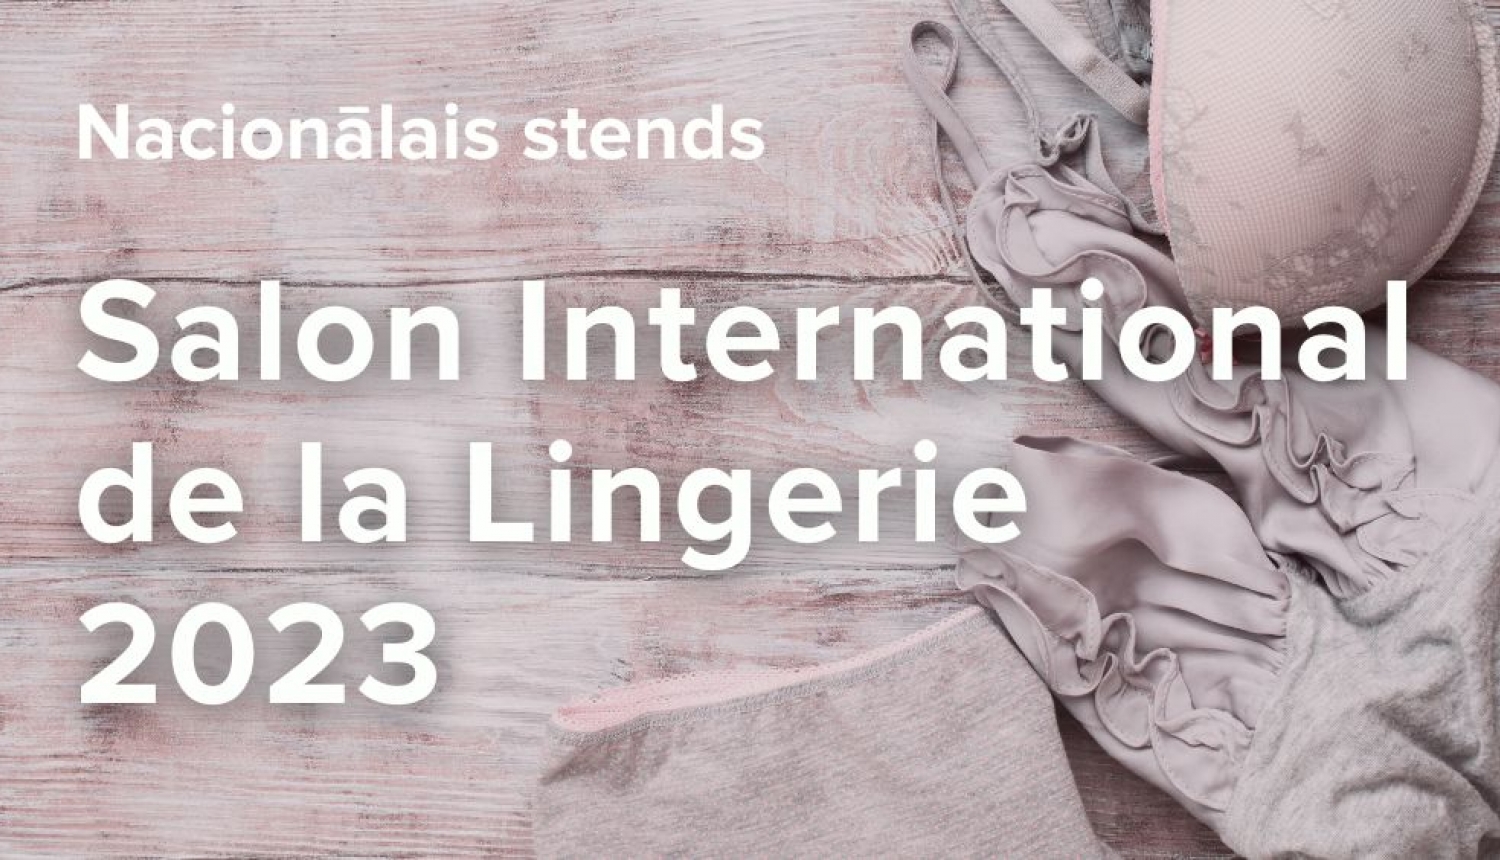 Pieteikšanās LIAA Salon International de la Lingerie 2023